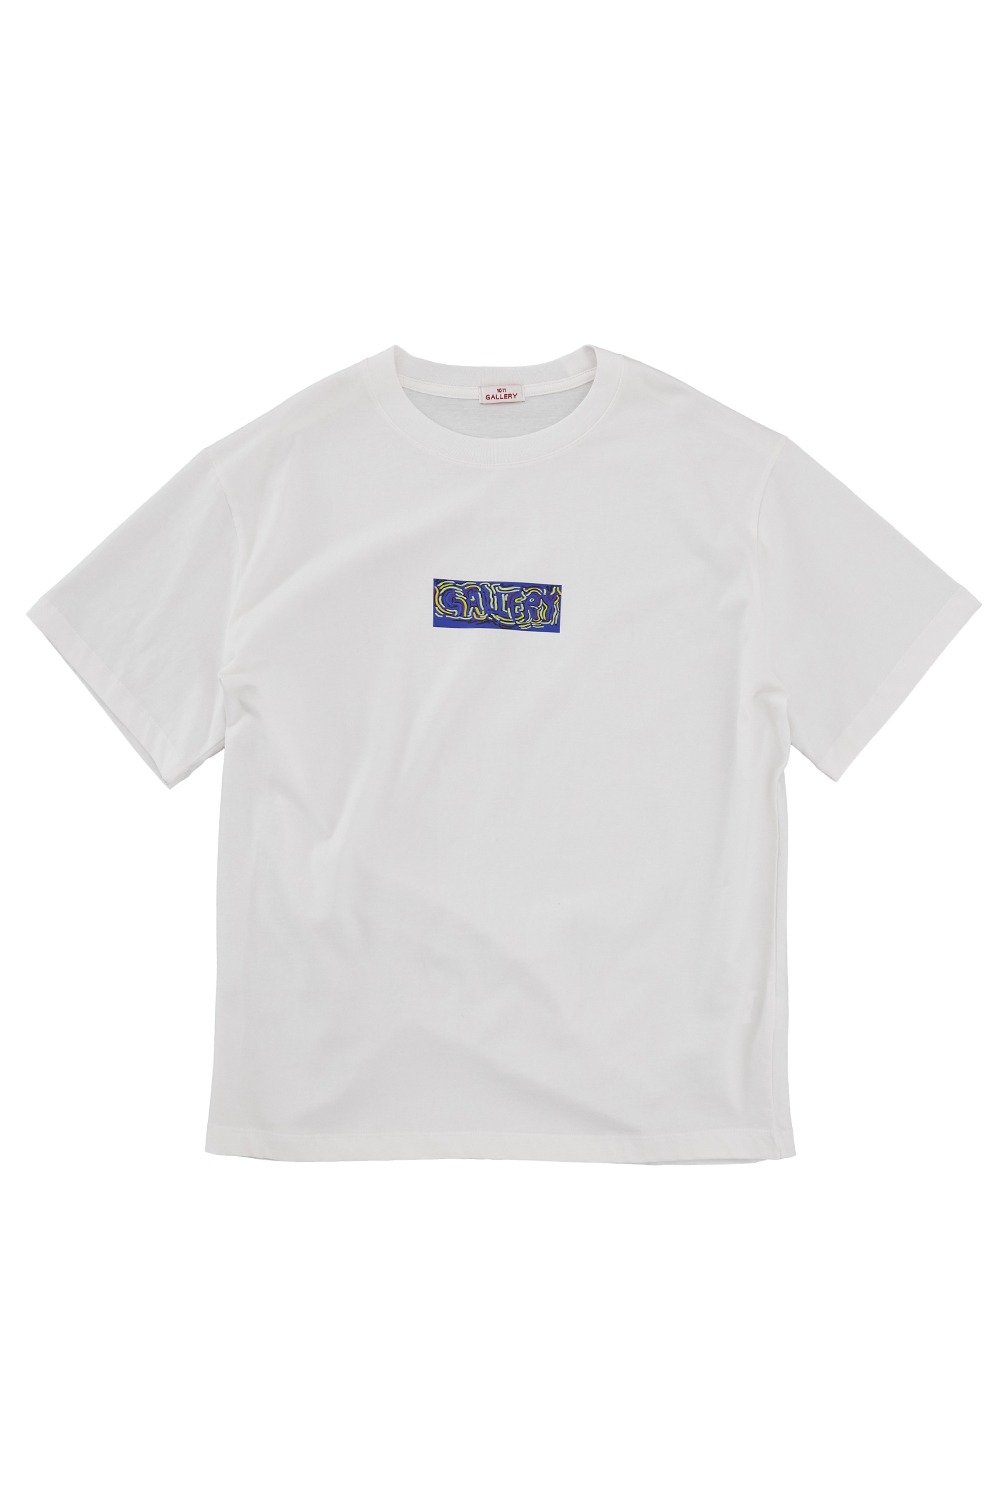 Hommage Van Gogh T-Shirt-White